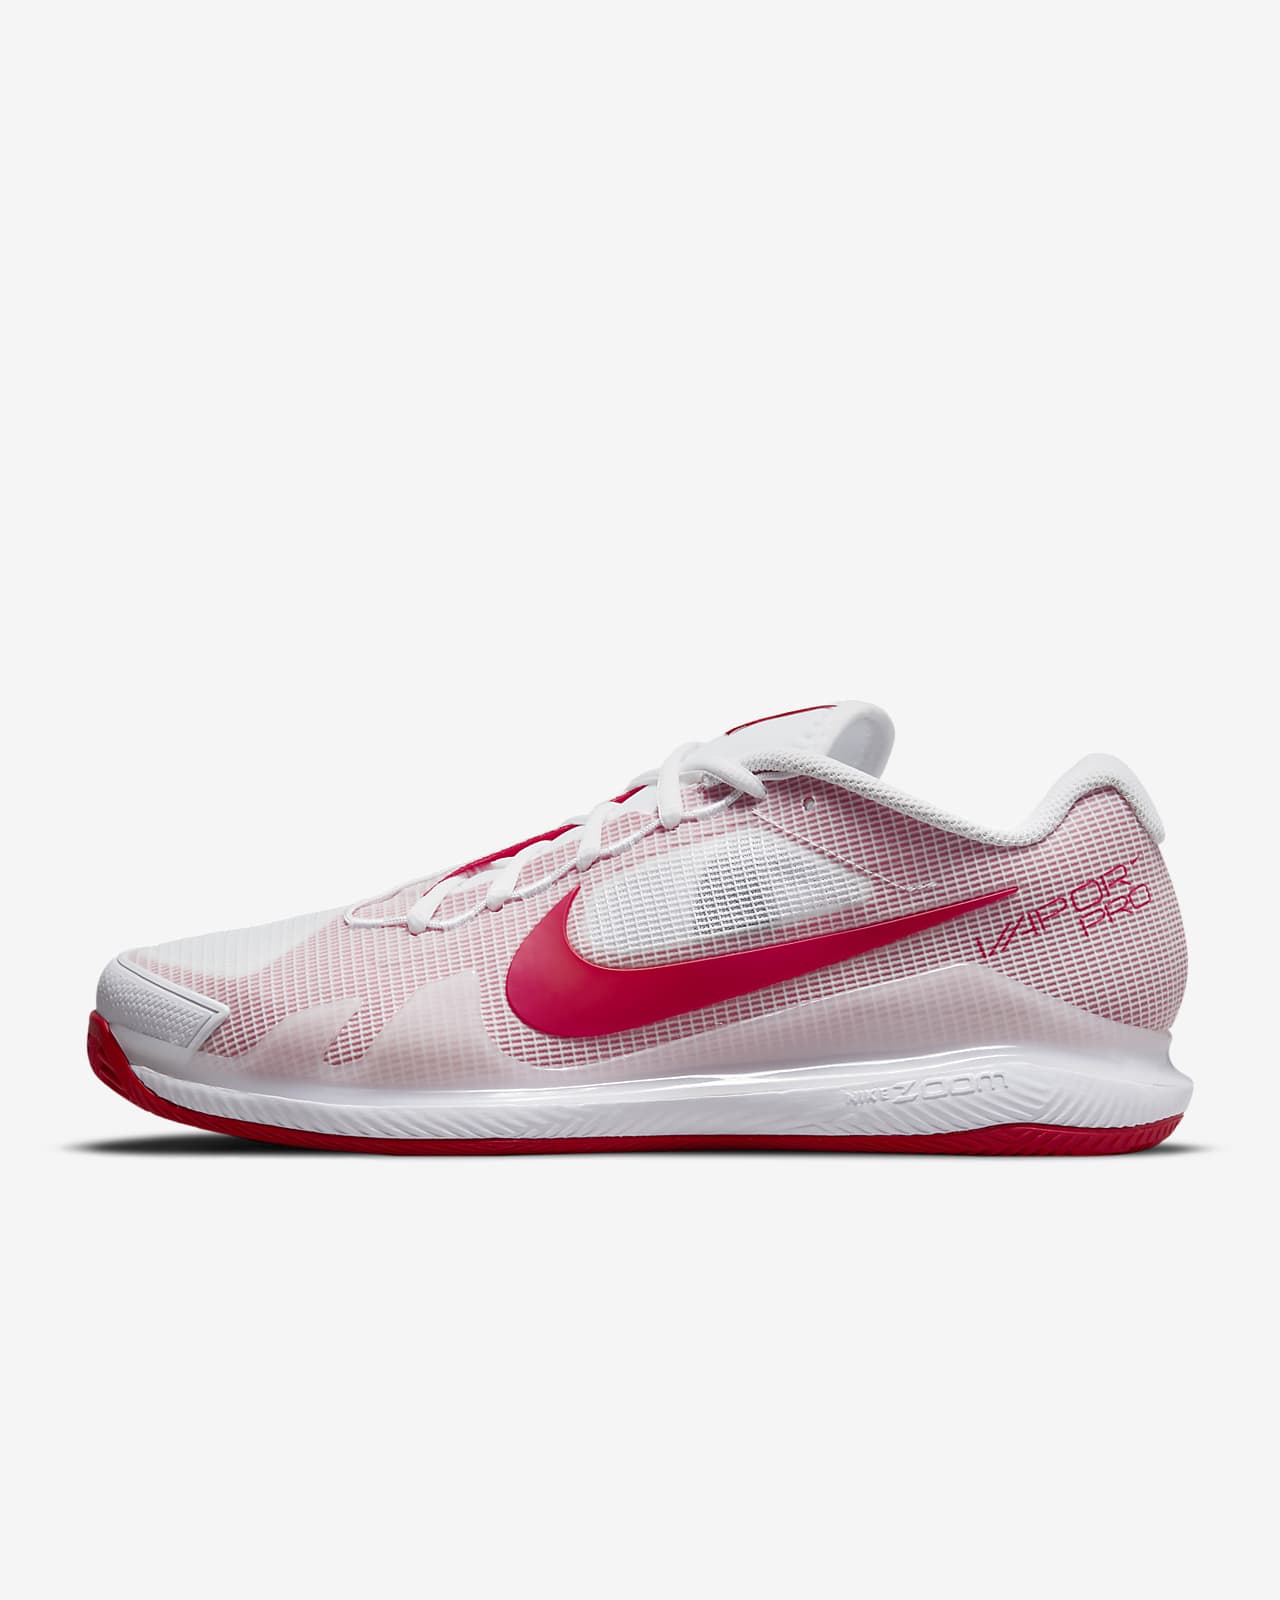 NikeCourt Air Zoom Vapor Pro Men's Clay Court Tennis Shoes. Nike LU